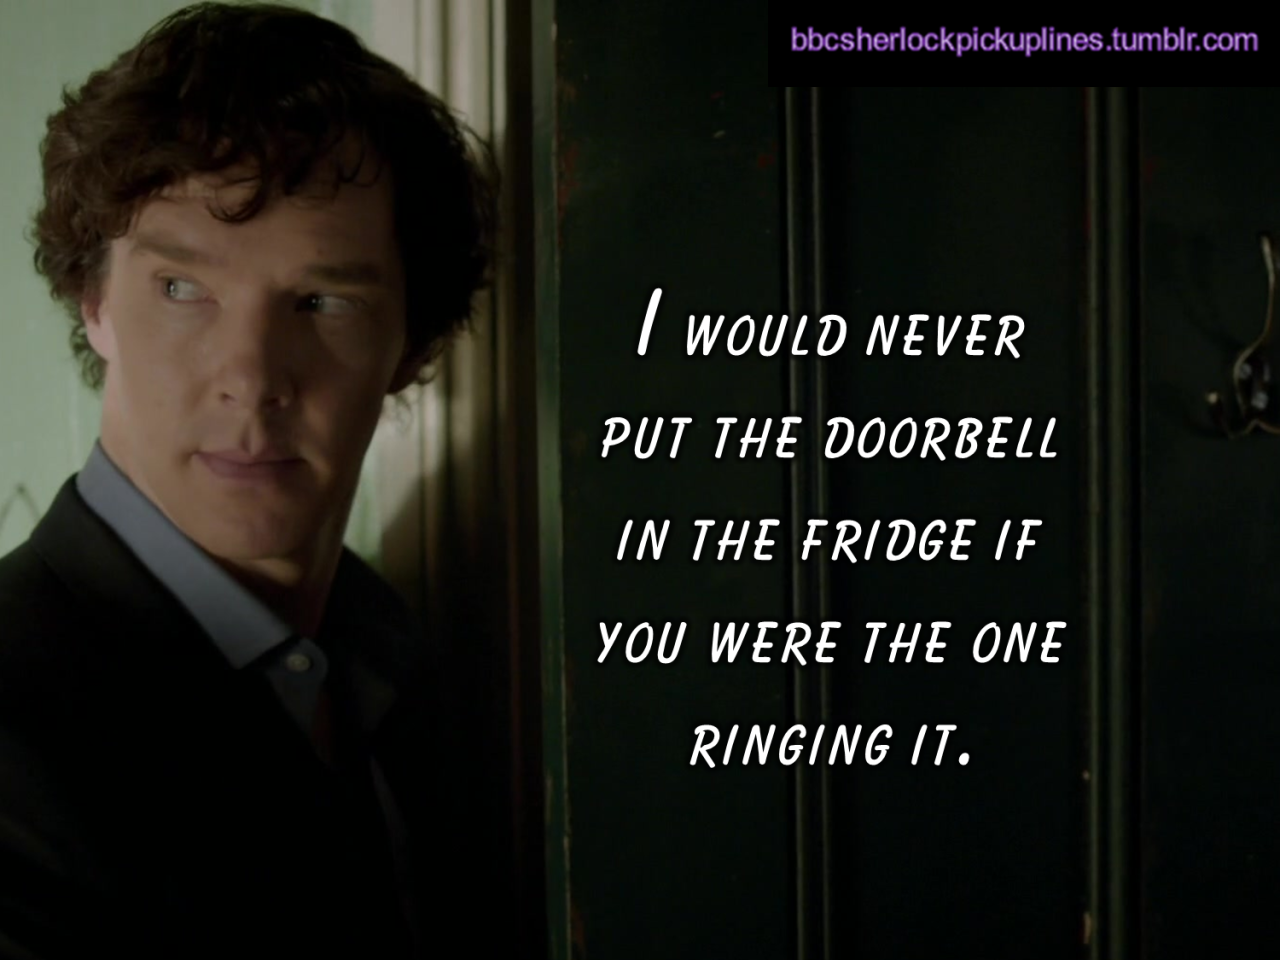 bbcsherlockpickuplines:“I would never put the doorbell in the fridge if you were